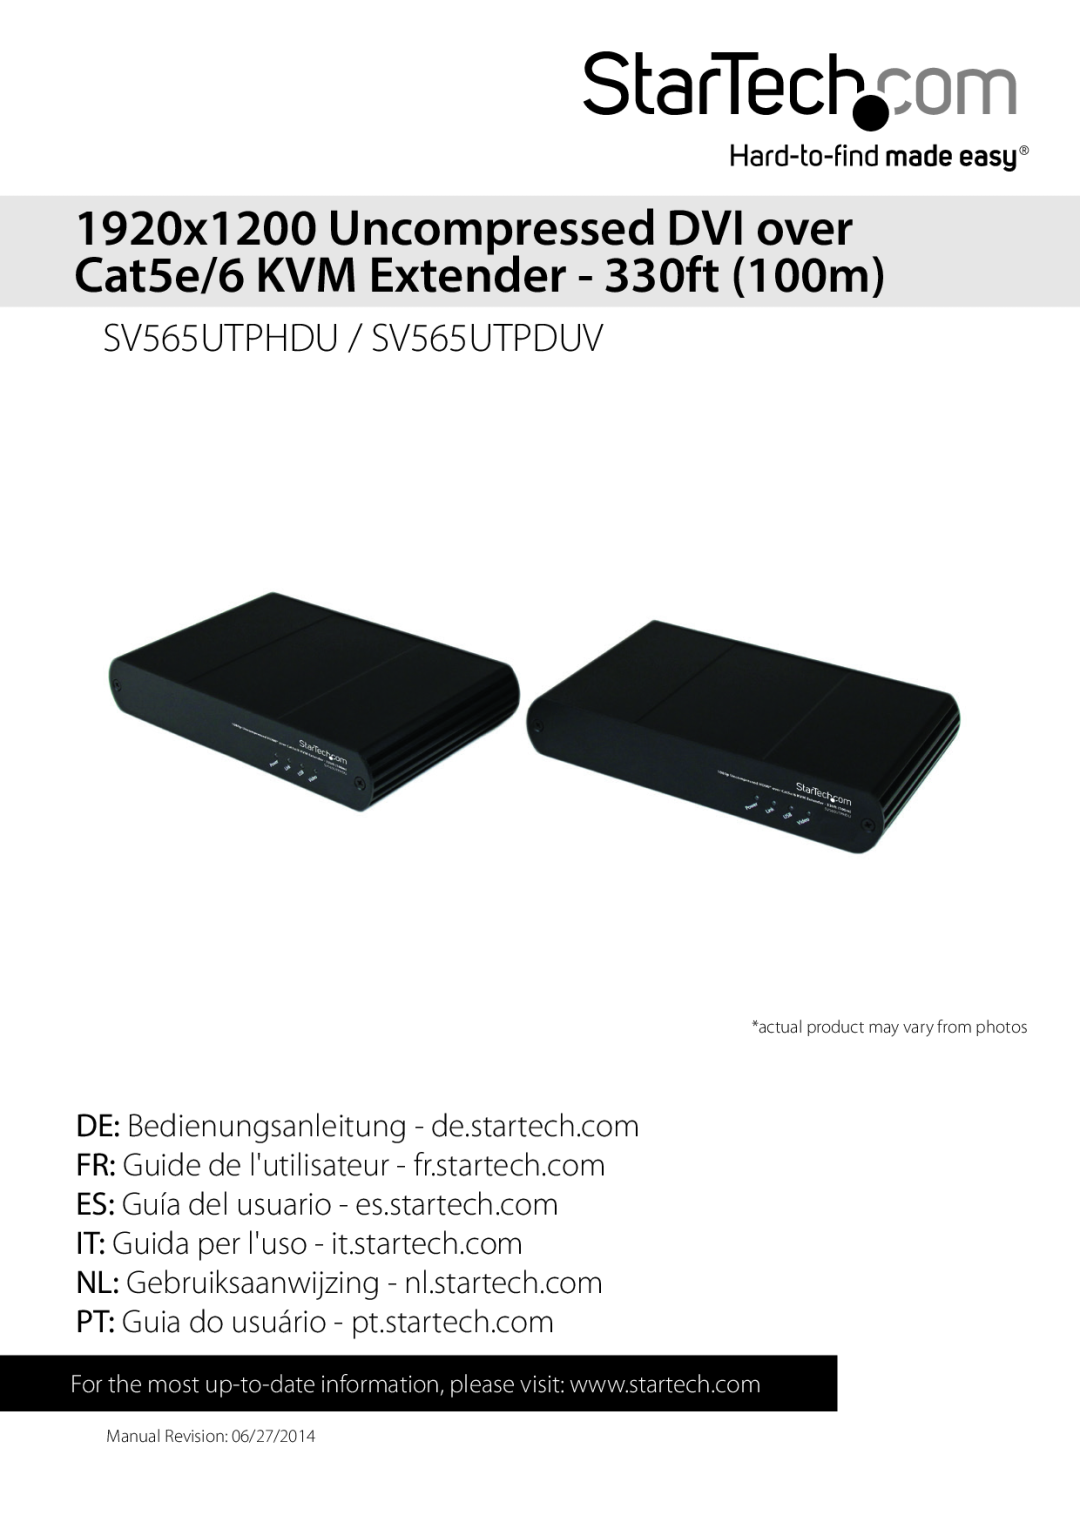 StarTech.com dvi over cat5e/6 kvm extender manual 1920x1200 Uncompressed DVI over Cat5e/6 KVM Extender - 330ft 100m 